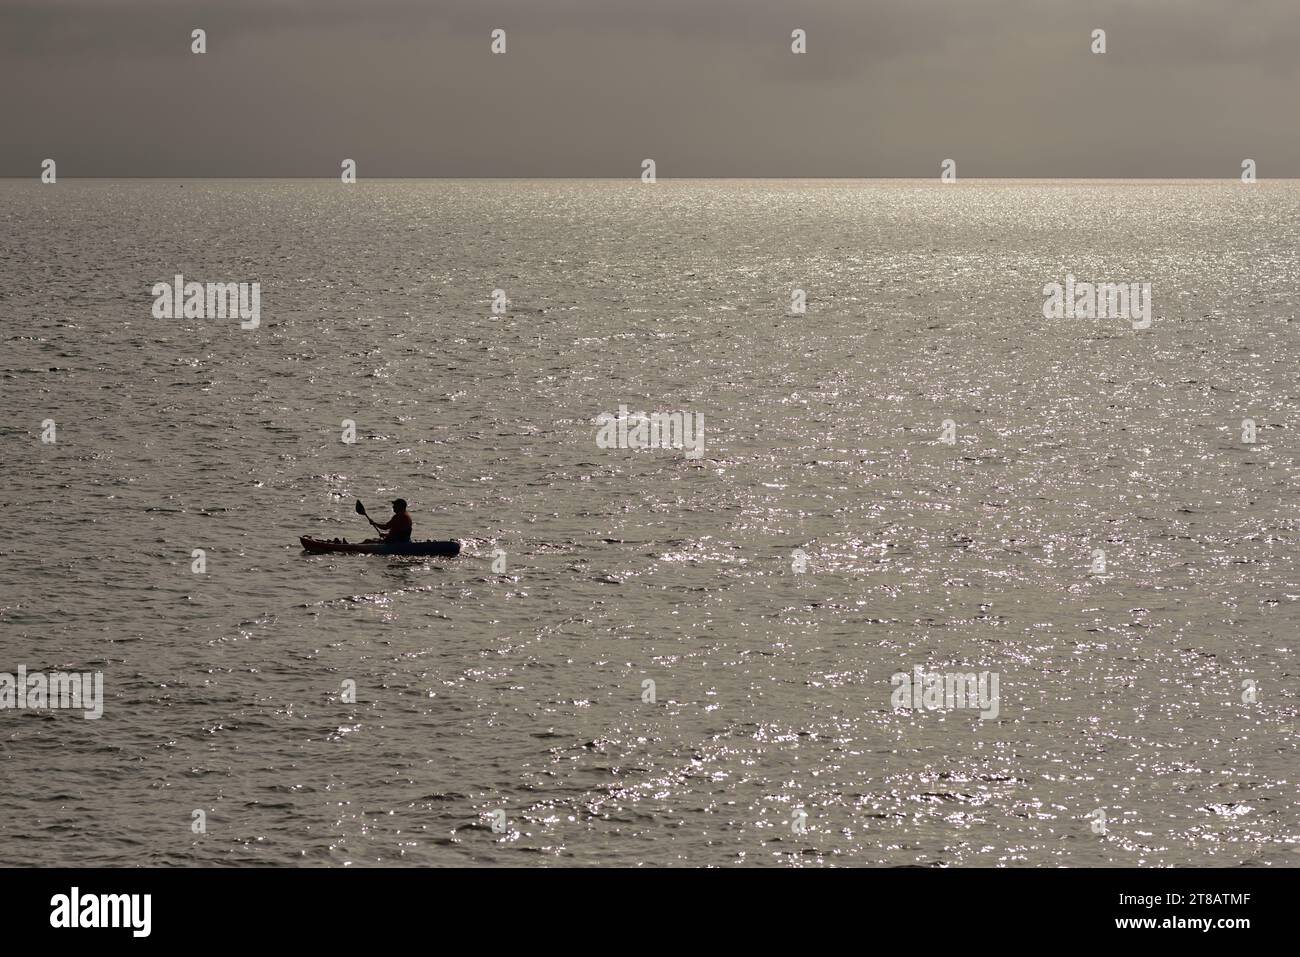 A lone canoeist in an open sea. Stock Photo